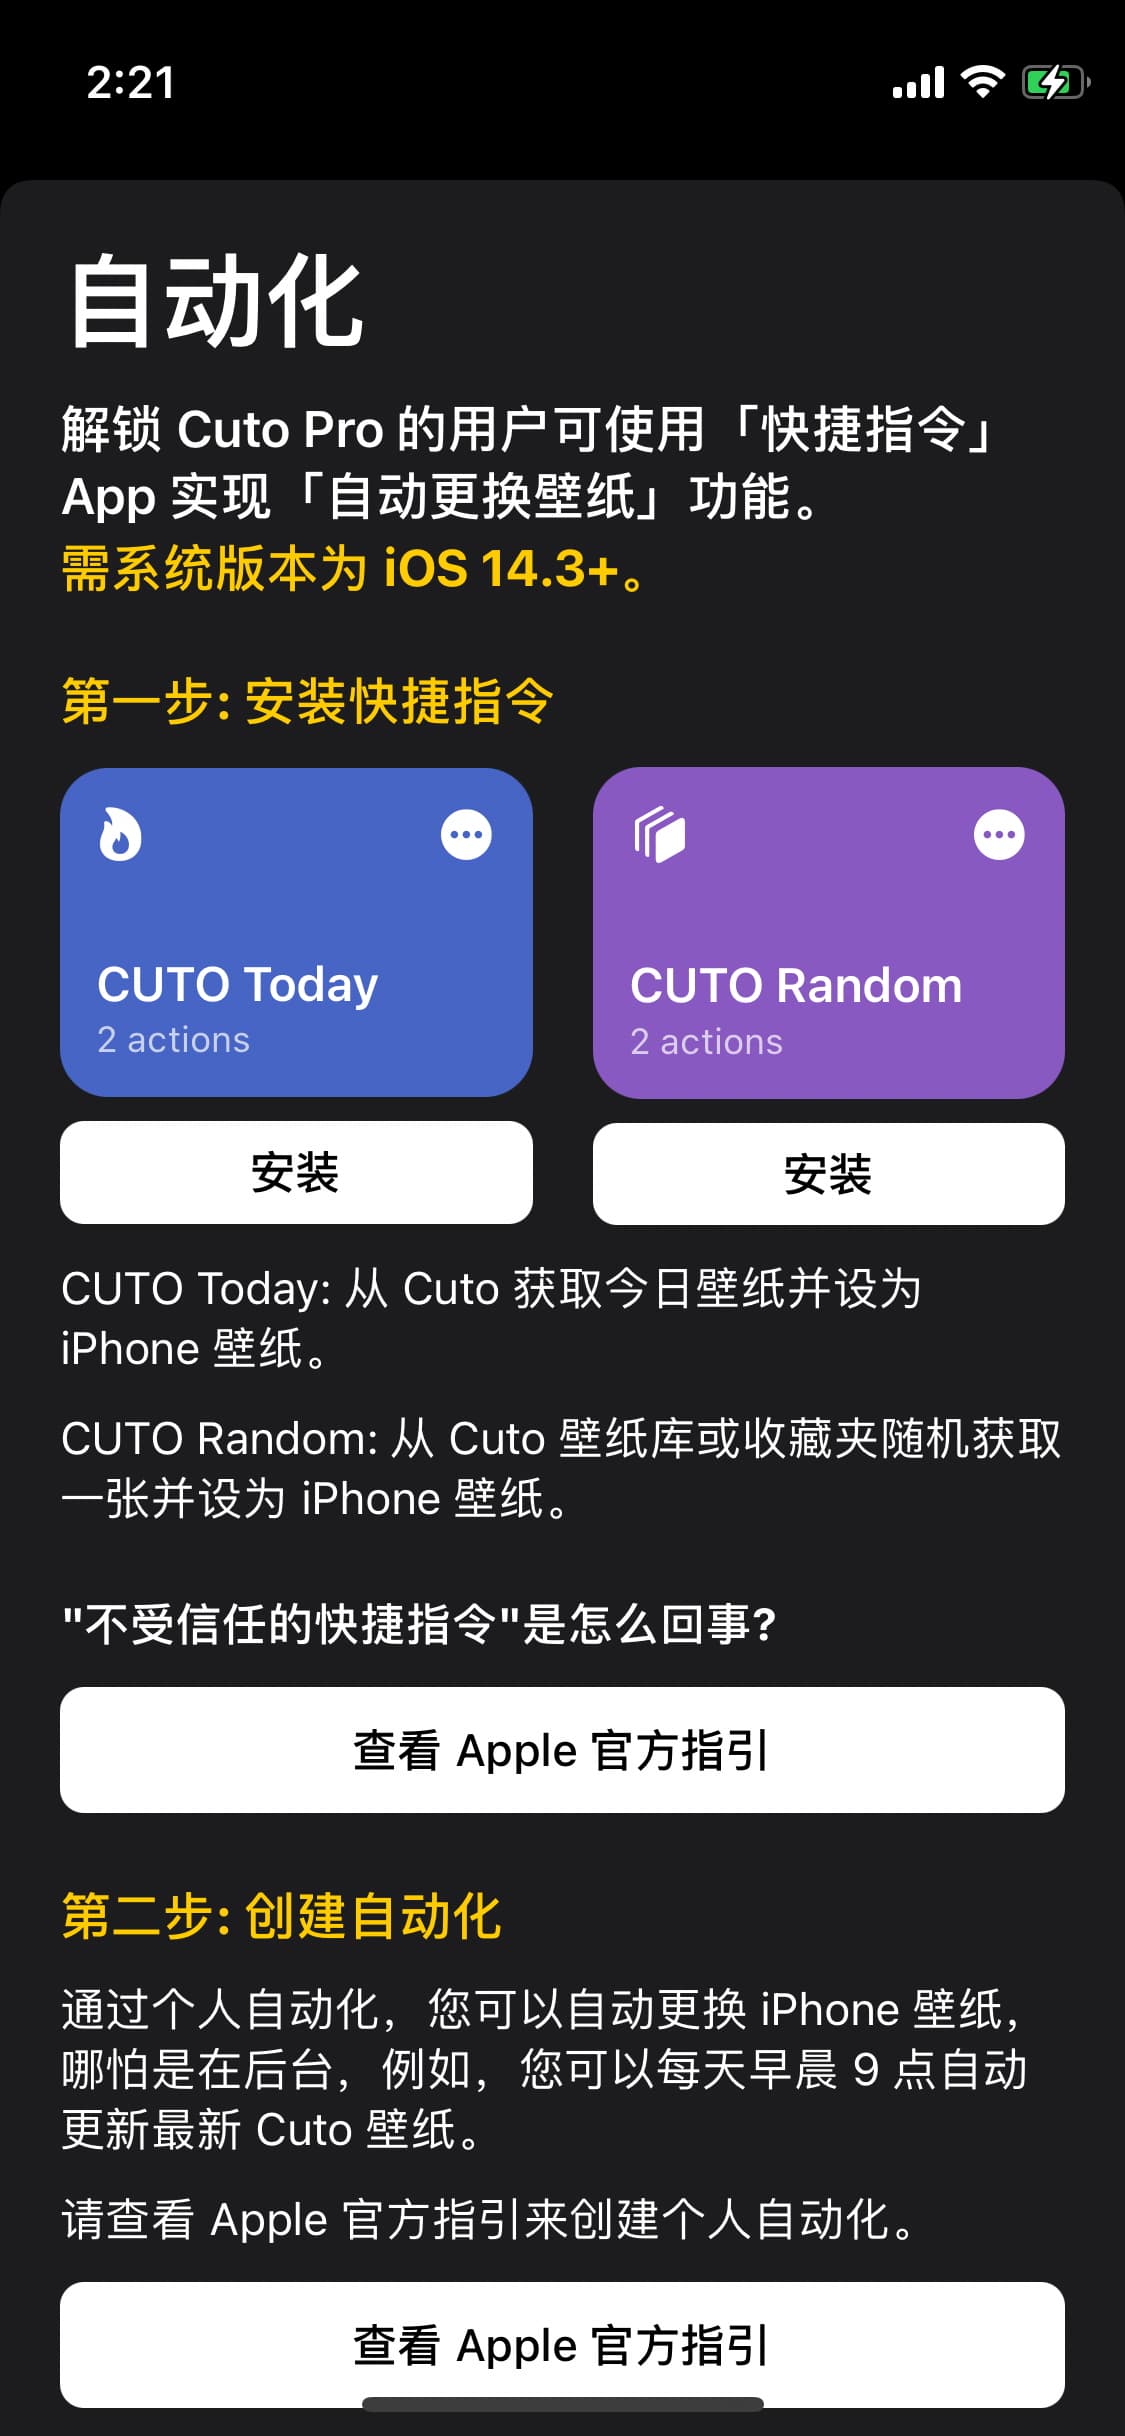 Cuto 2.0 Automation